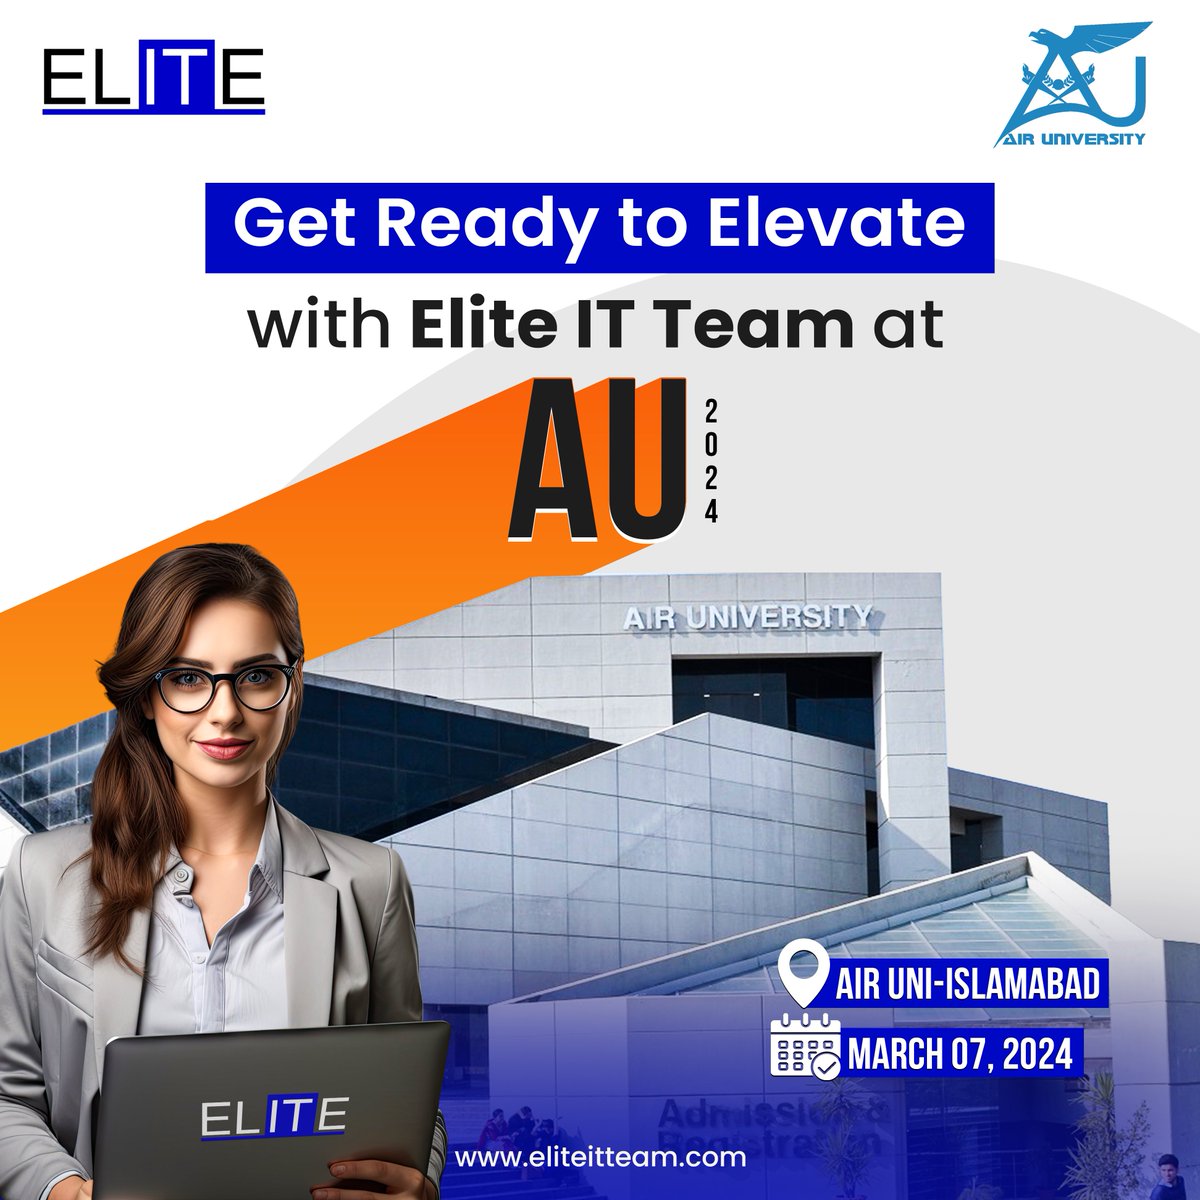 Get ready to elevate with Elite-IT Team at 𝗔𝗶𝗿 𝗨𝗻𝗶𝘃𝗲𝗿𝘀𝗶𝘁𝘆 2024.

𝗘𝗹𝗶𝘁𝗲 𝗜𝗧 𝗧𝗲𝗮𝗺 𝗟𝗶𝗺𝗶𝘁𝗲𝗱
eliteitteam.com

#eliteitteam #elitehirings #au #informationtechnology #airuniversity #informationtechnologystudents #airuniversity